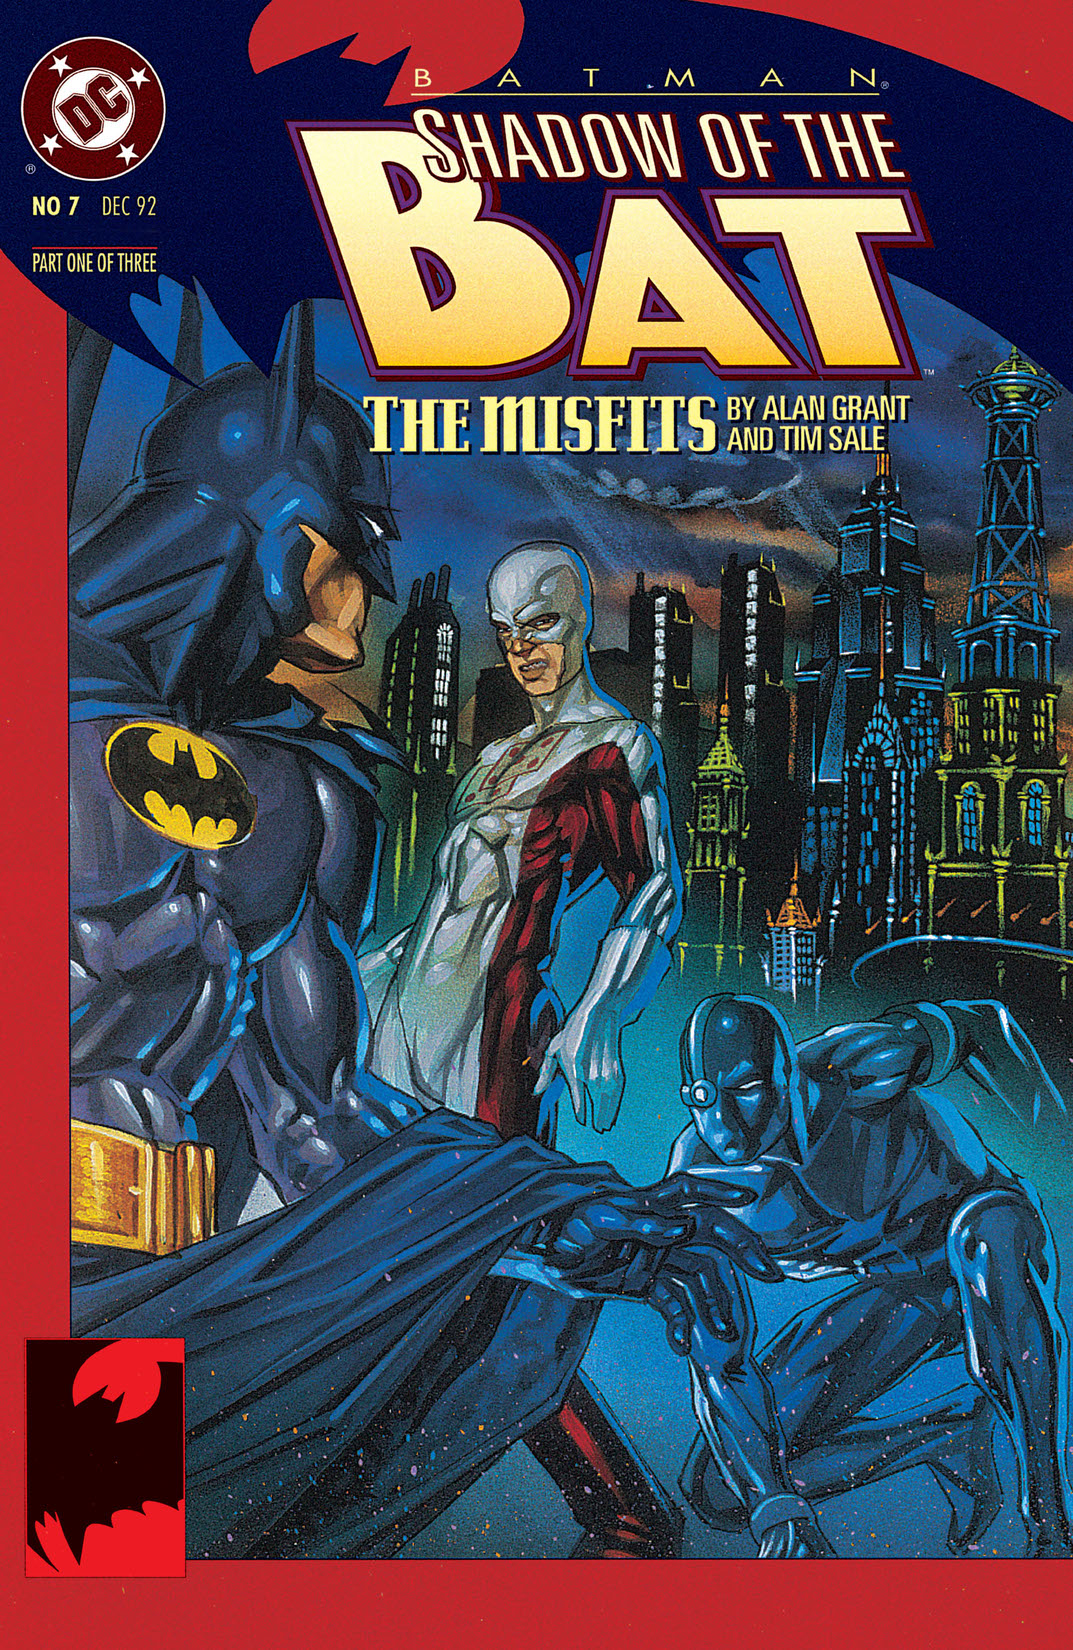 Batman: Shadow of the Bat #7 preview images